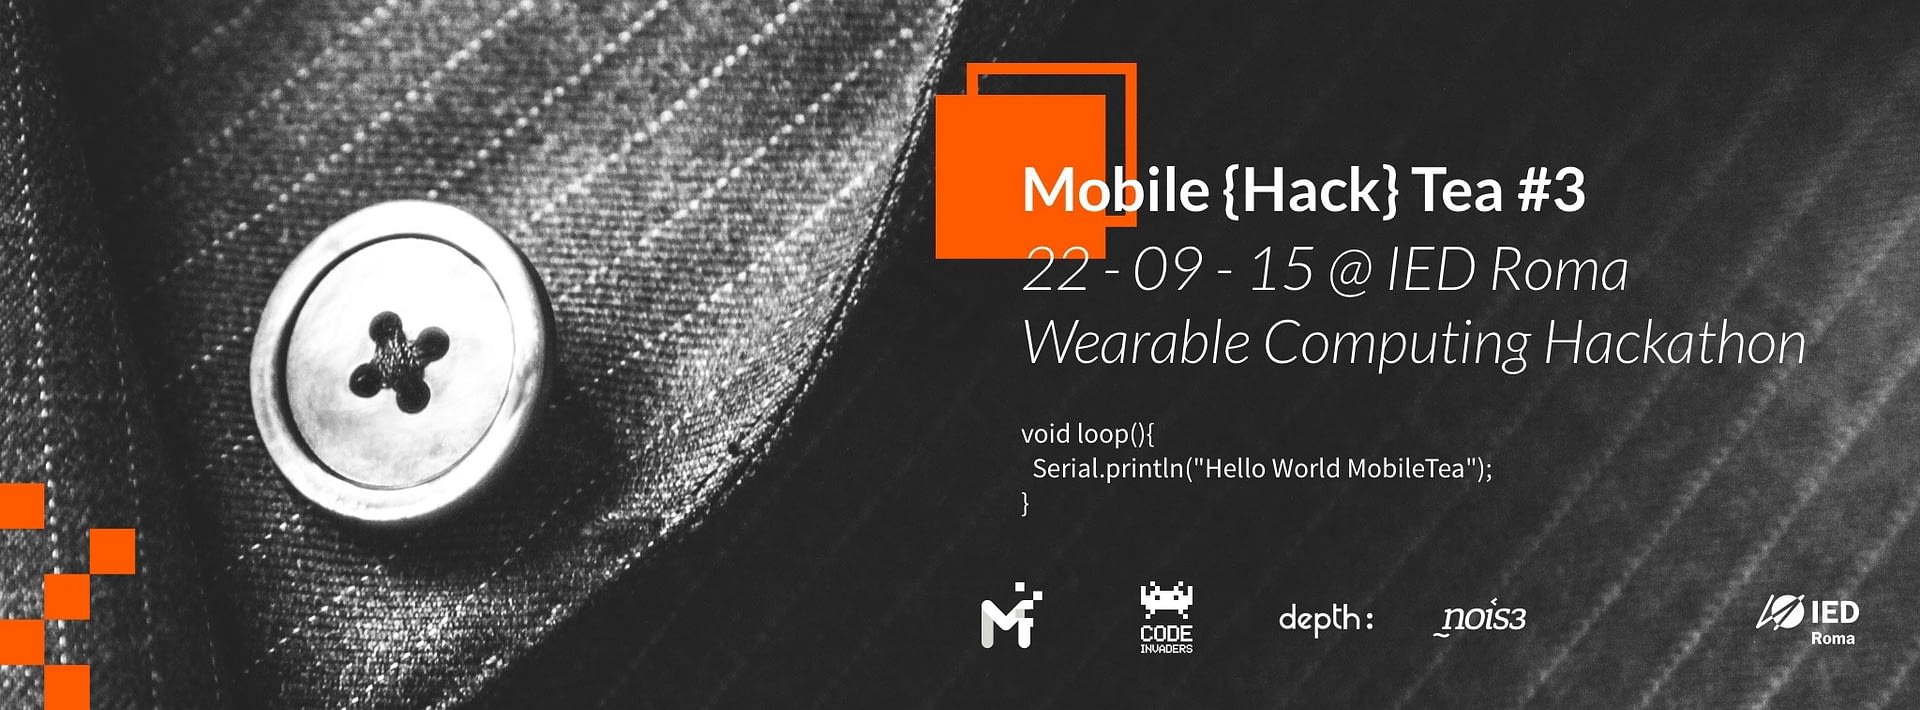 mobile hack tea hackathon code invaders ied roma interaction design wearable computing nois3 depth: